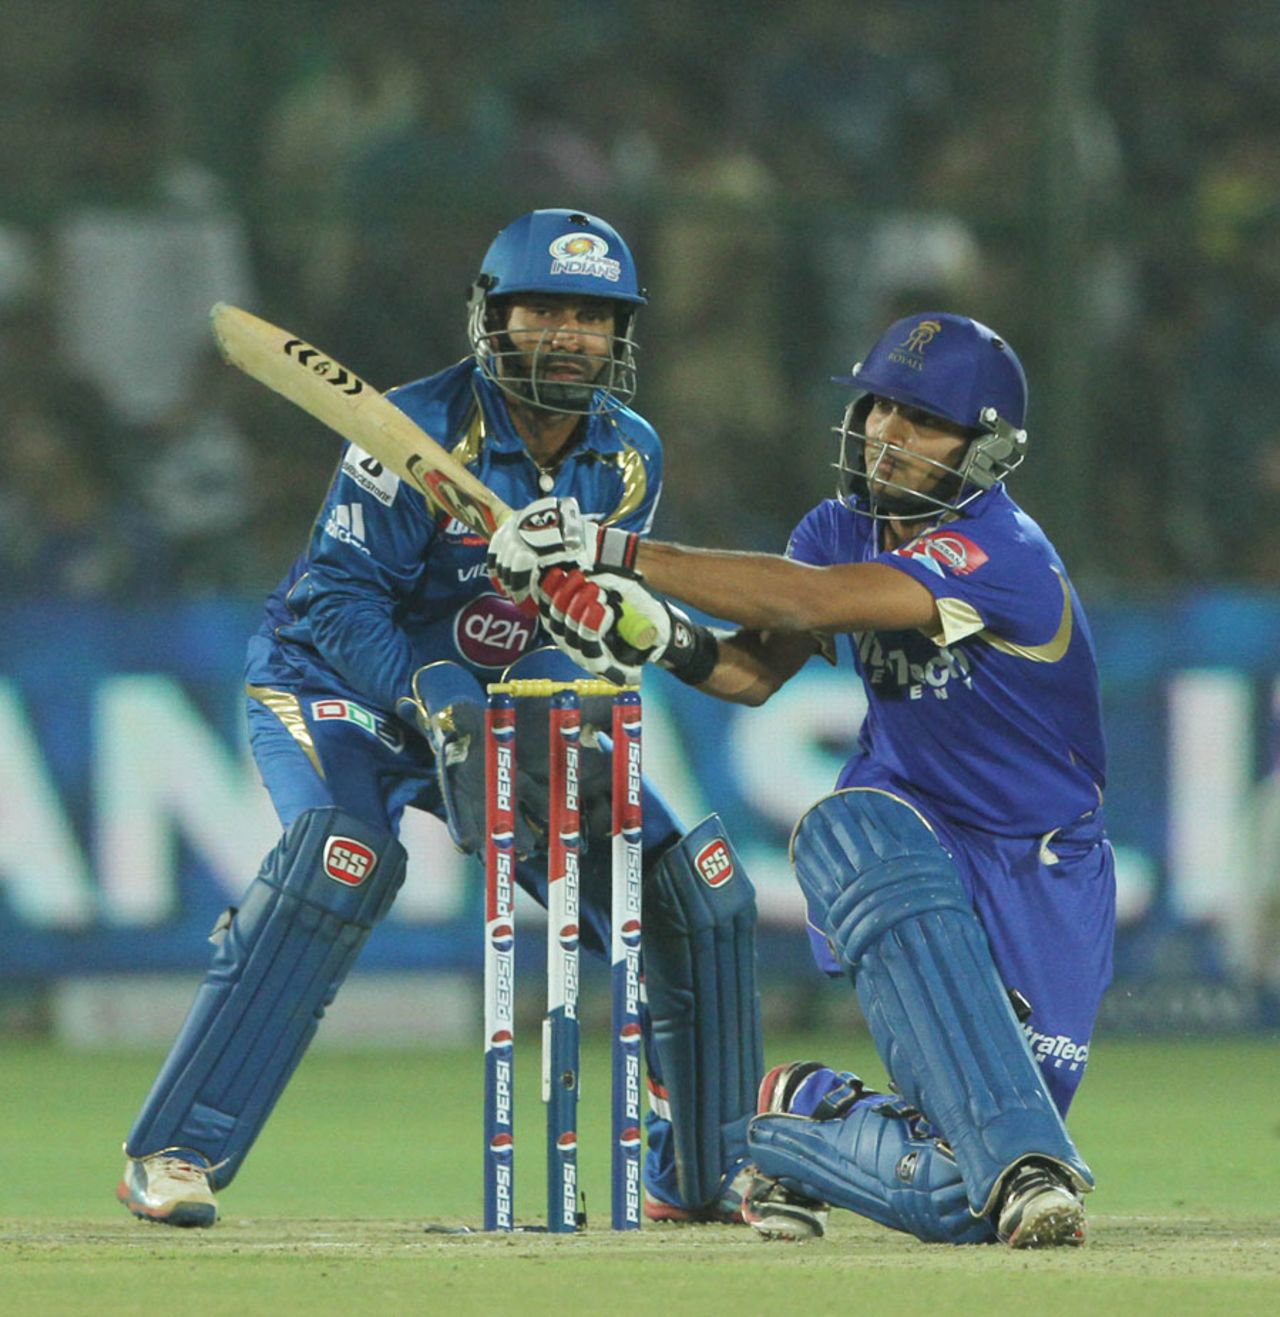 Dishant Yagnik sweeps during his innings of 34, Rajasthan Royals v Mumbai Indians, IPL 2013, Jaipur, April 17, 2013